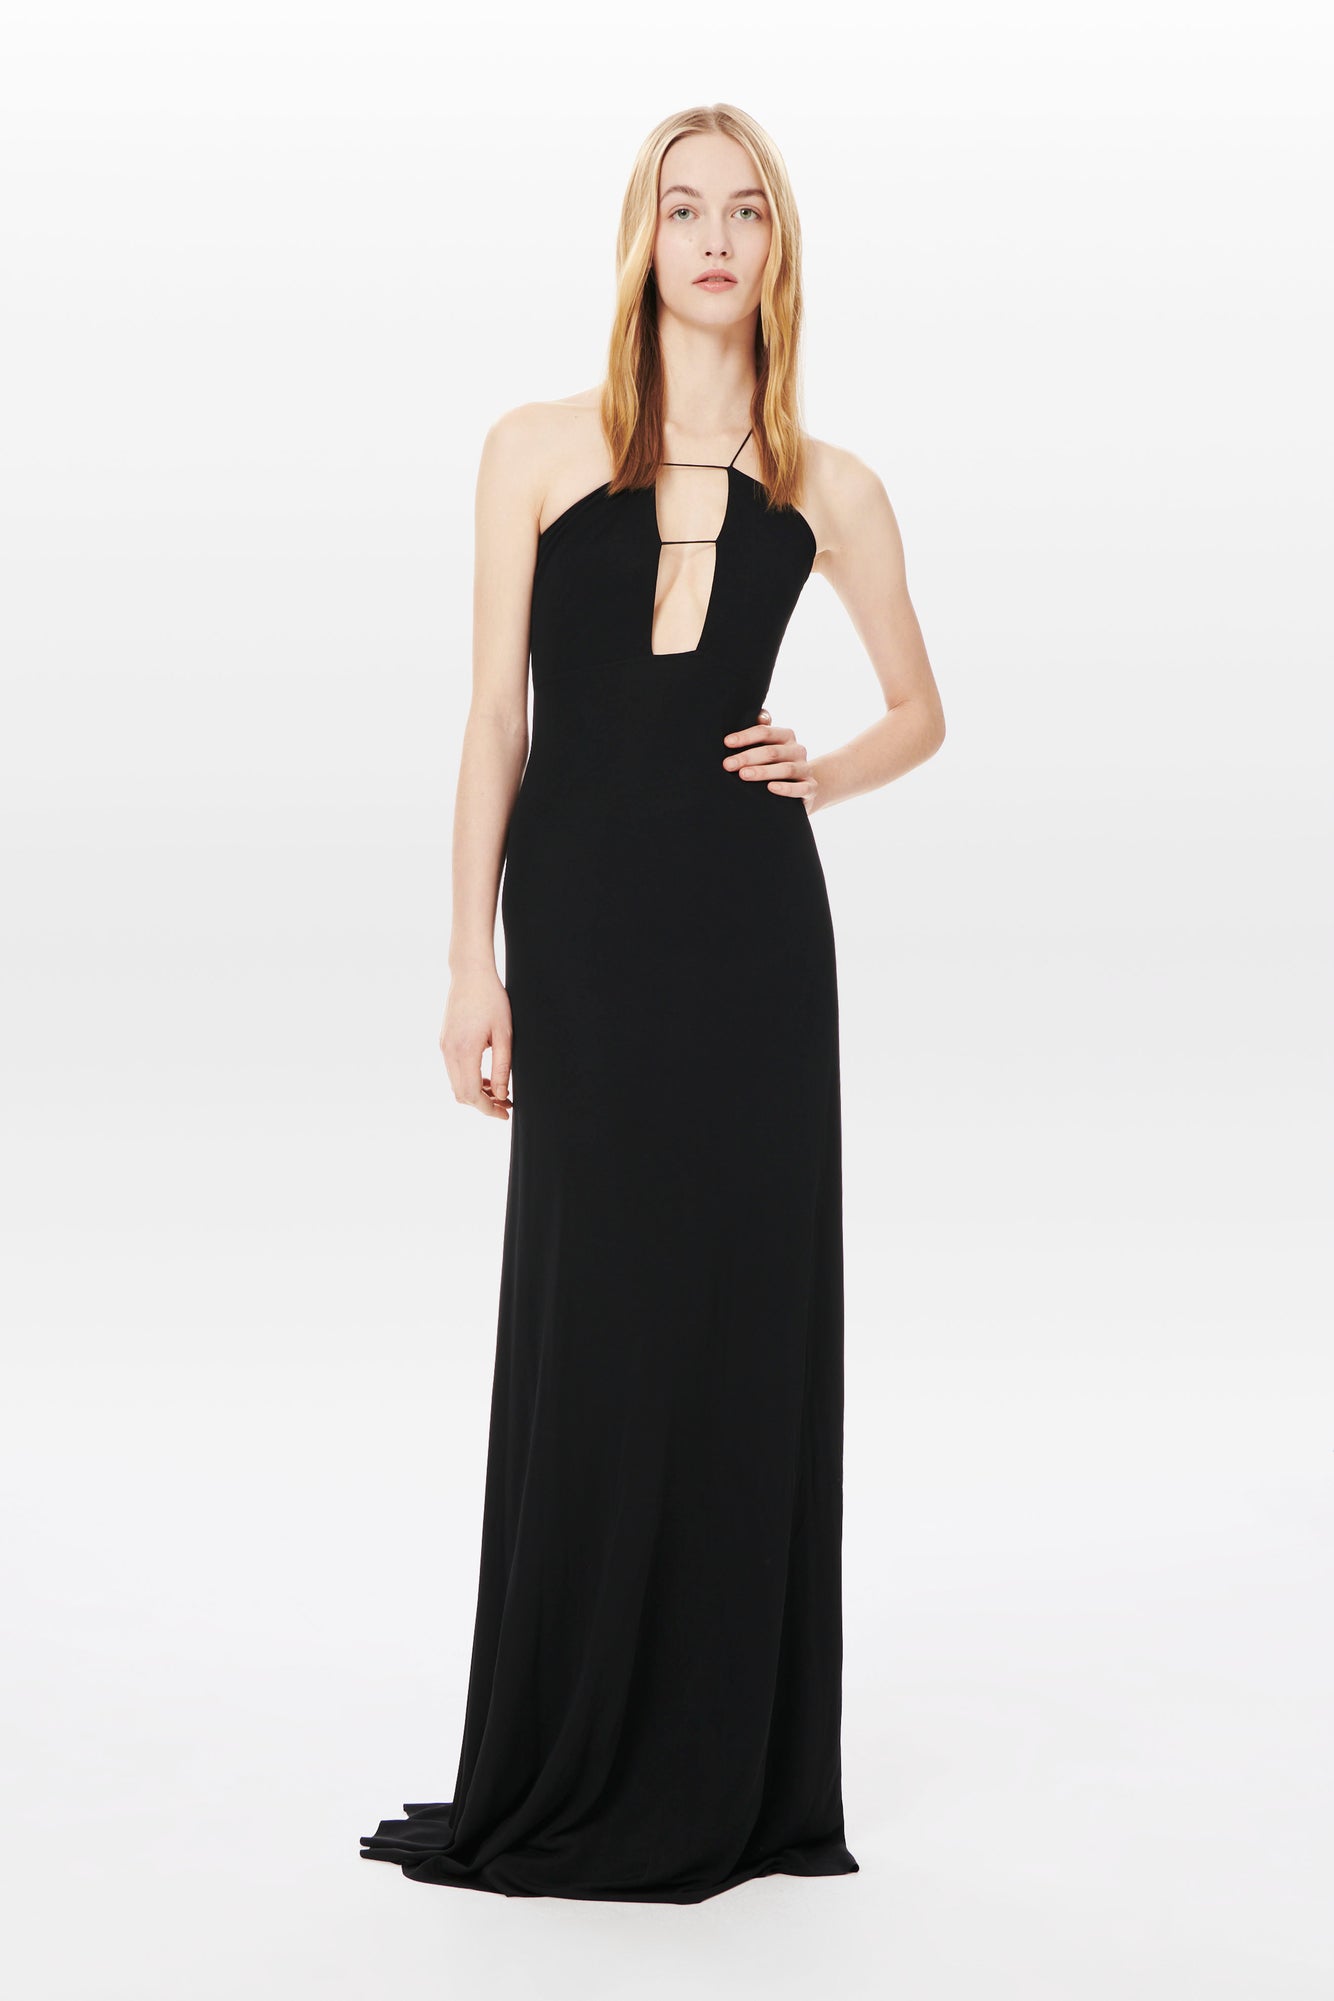 Victoria Beckham Halter Floor-Length Dress in Black